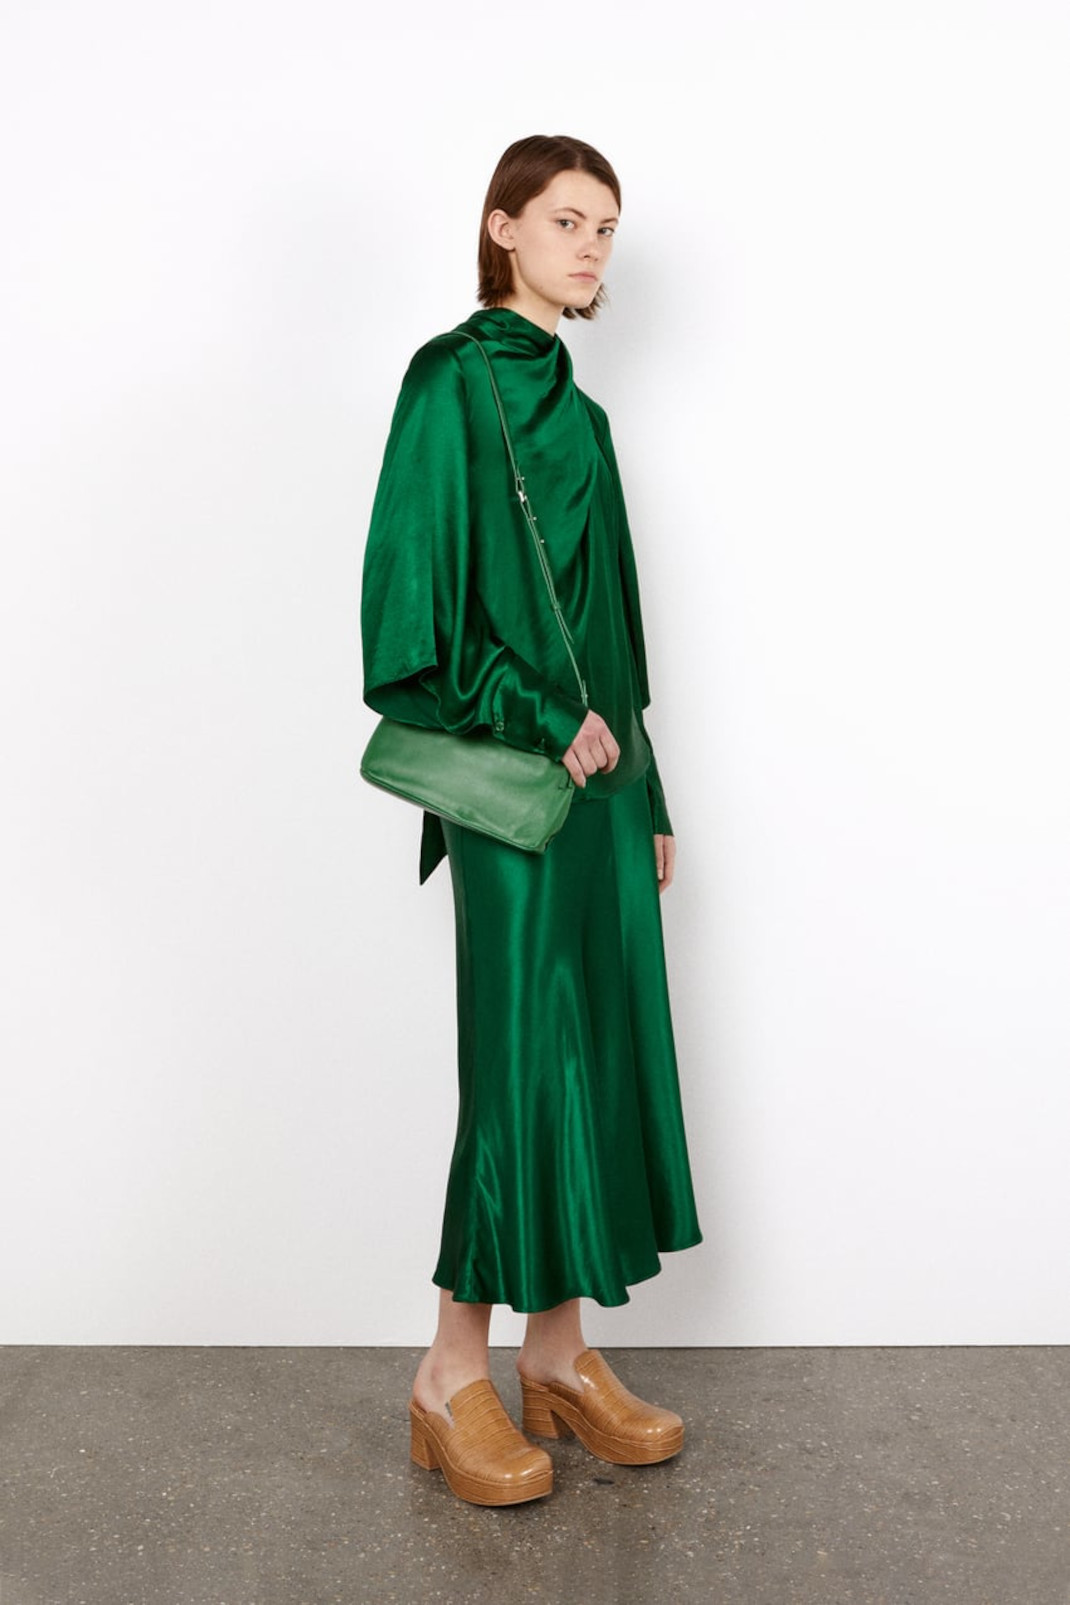 H Ελένη Μενεγάκη με φίνα σατέν φούστα από τα Zara -Σε πράσινο χρώμα 